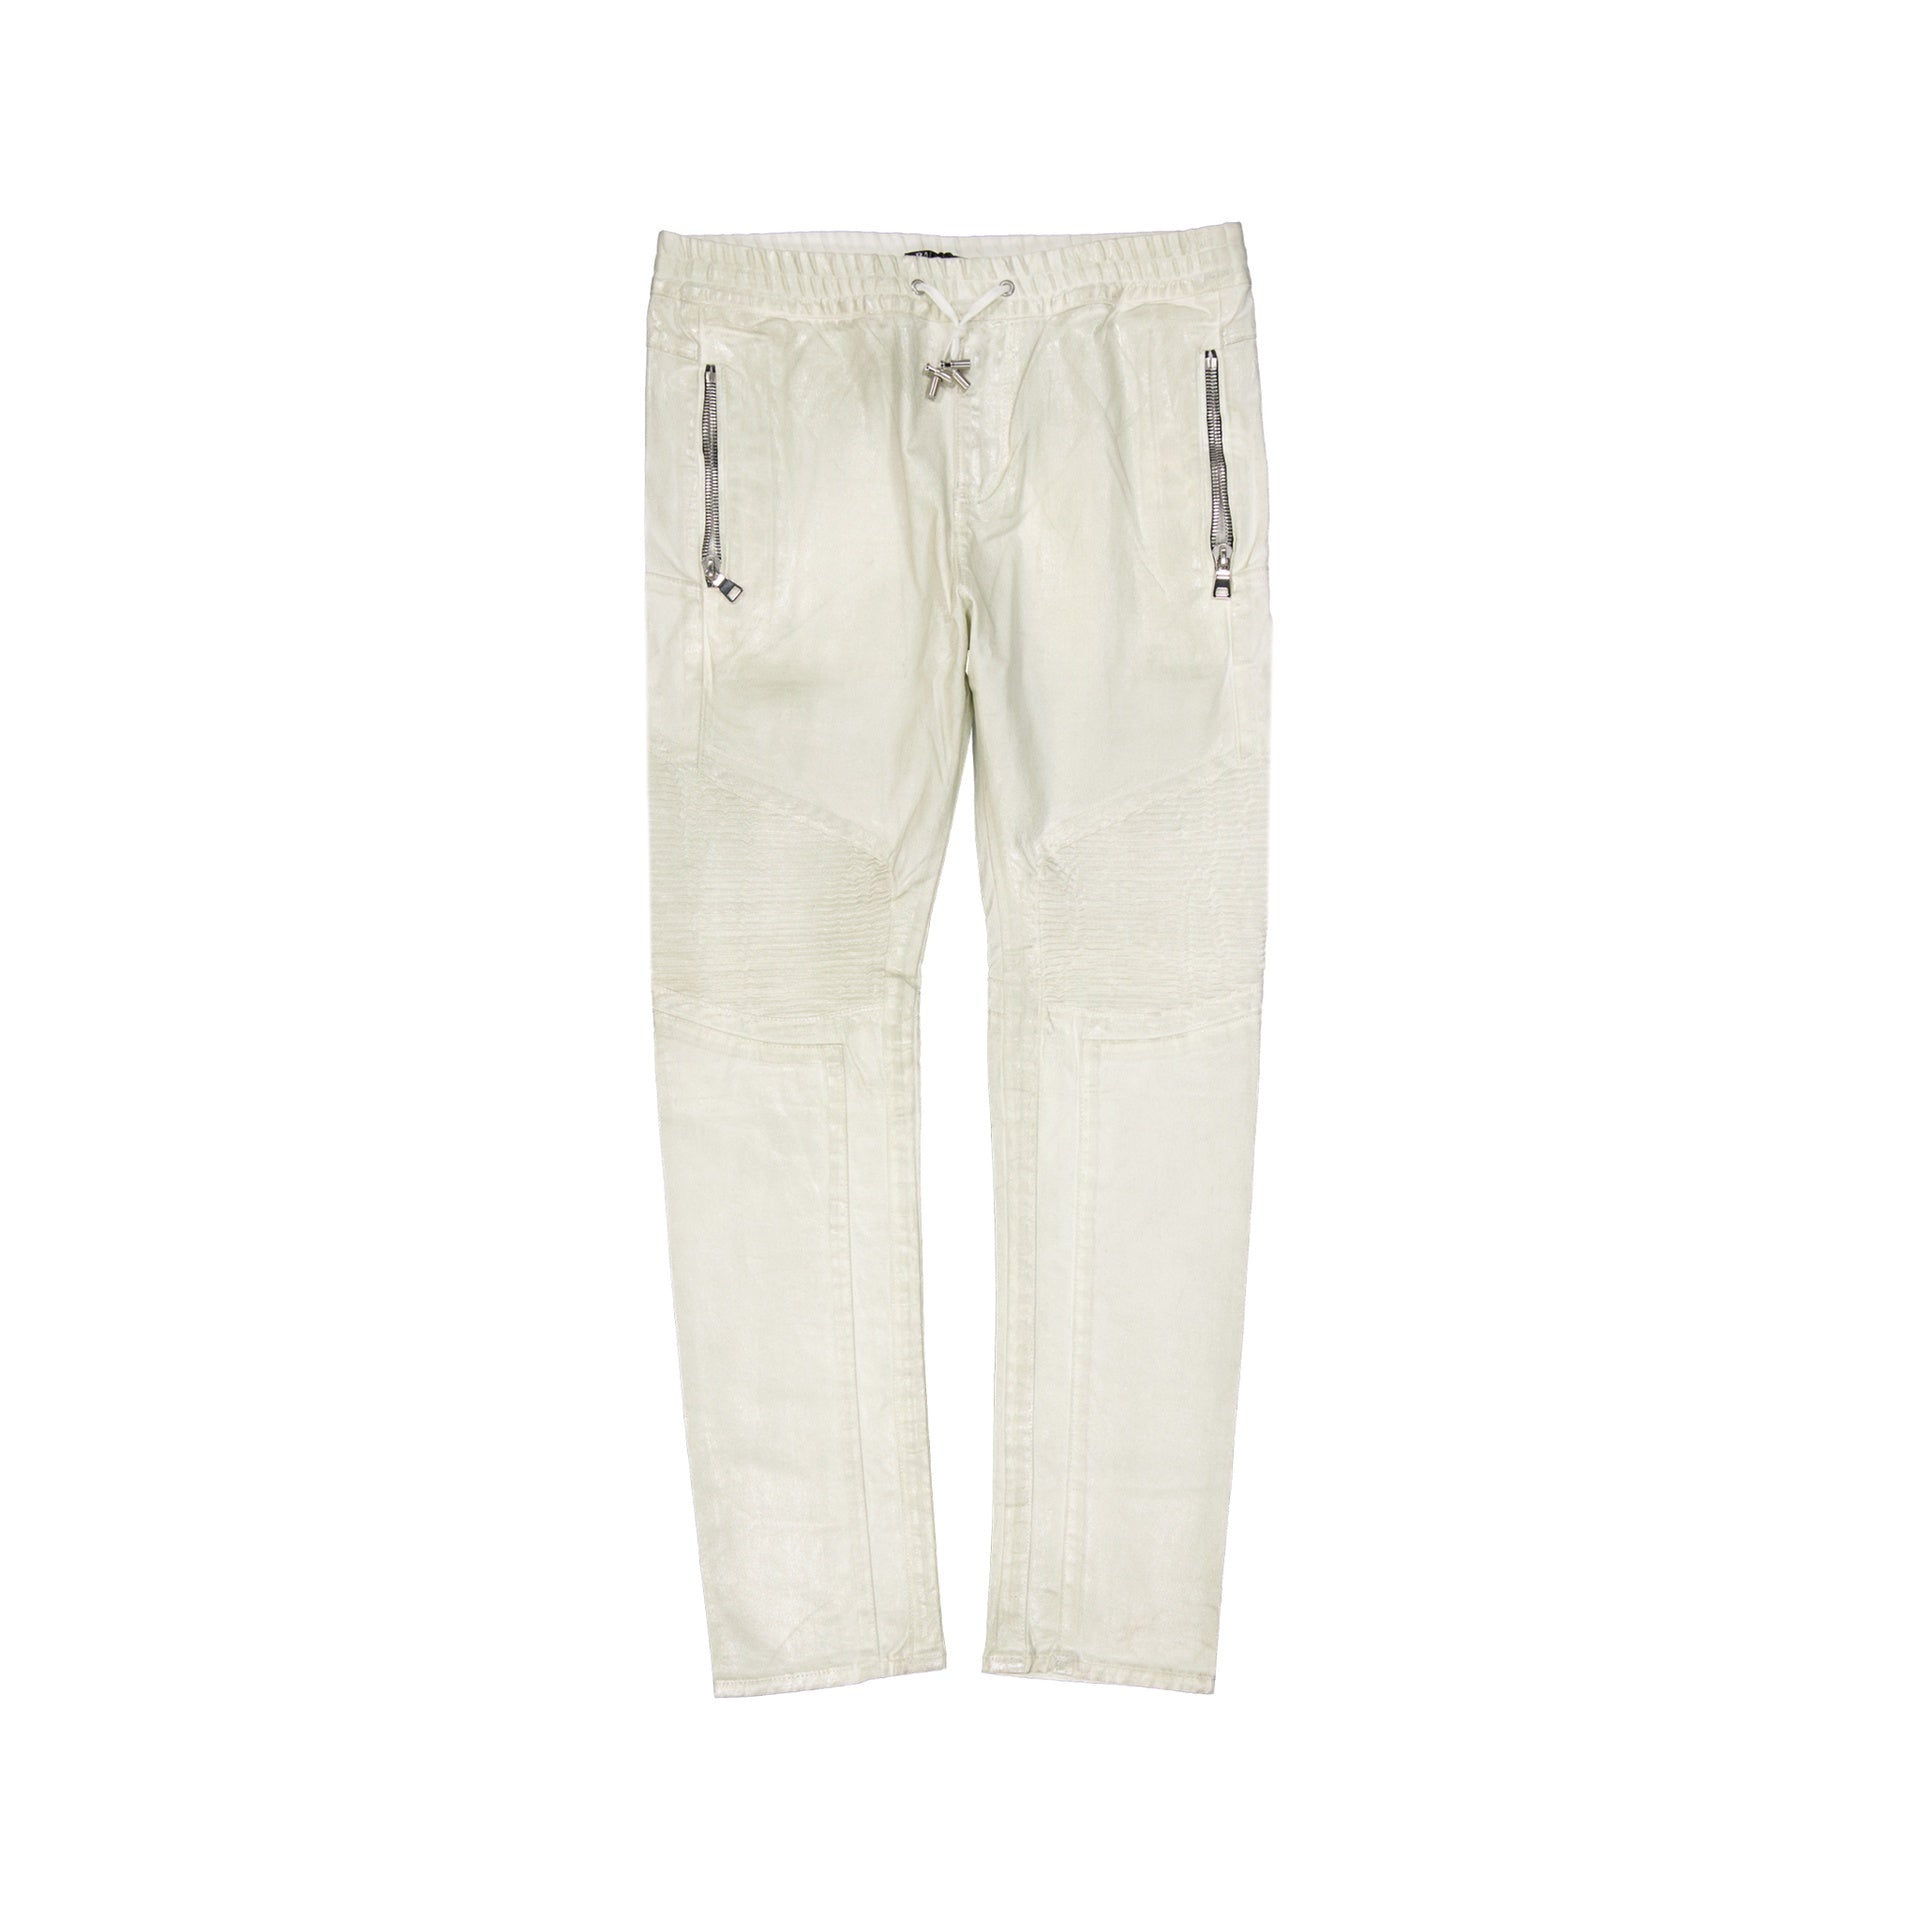 BALMAIN-OUTLET-SALE-Balmain-Cotton-Glitter-Pants-Hosen-WHITE-M-ARCHIVE-COLLECTION.jpg